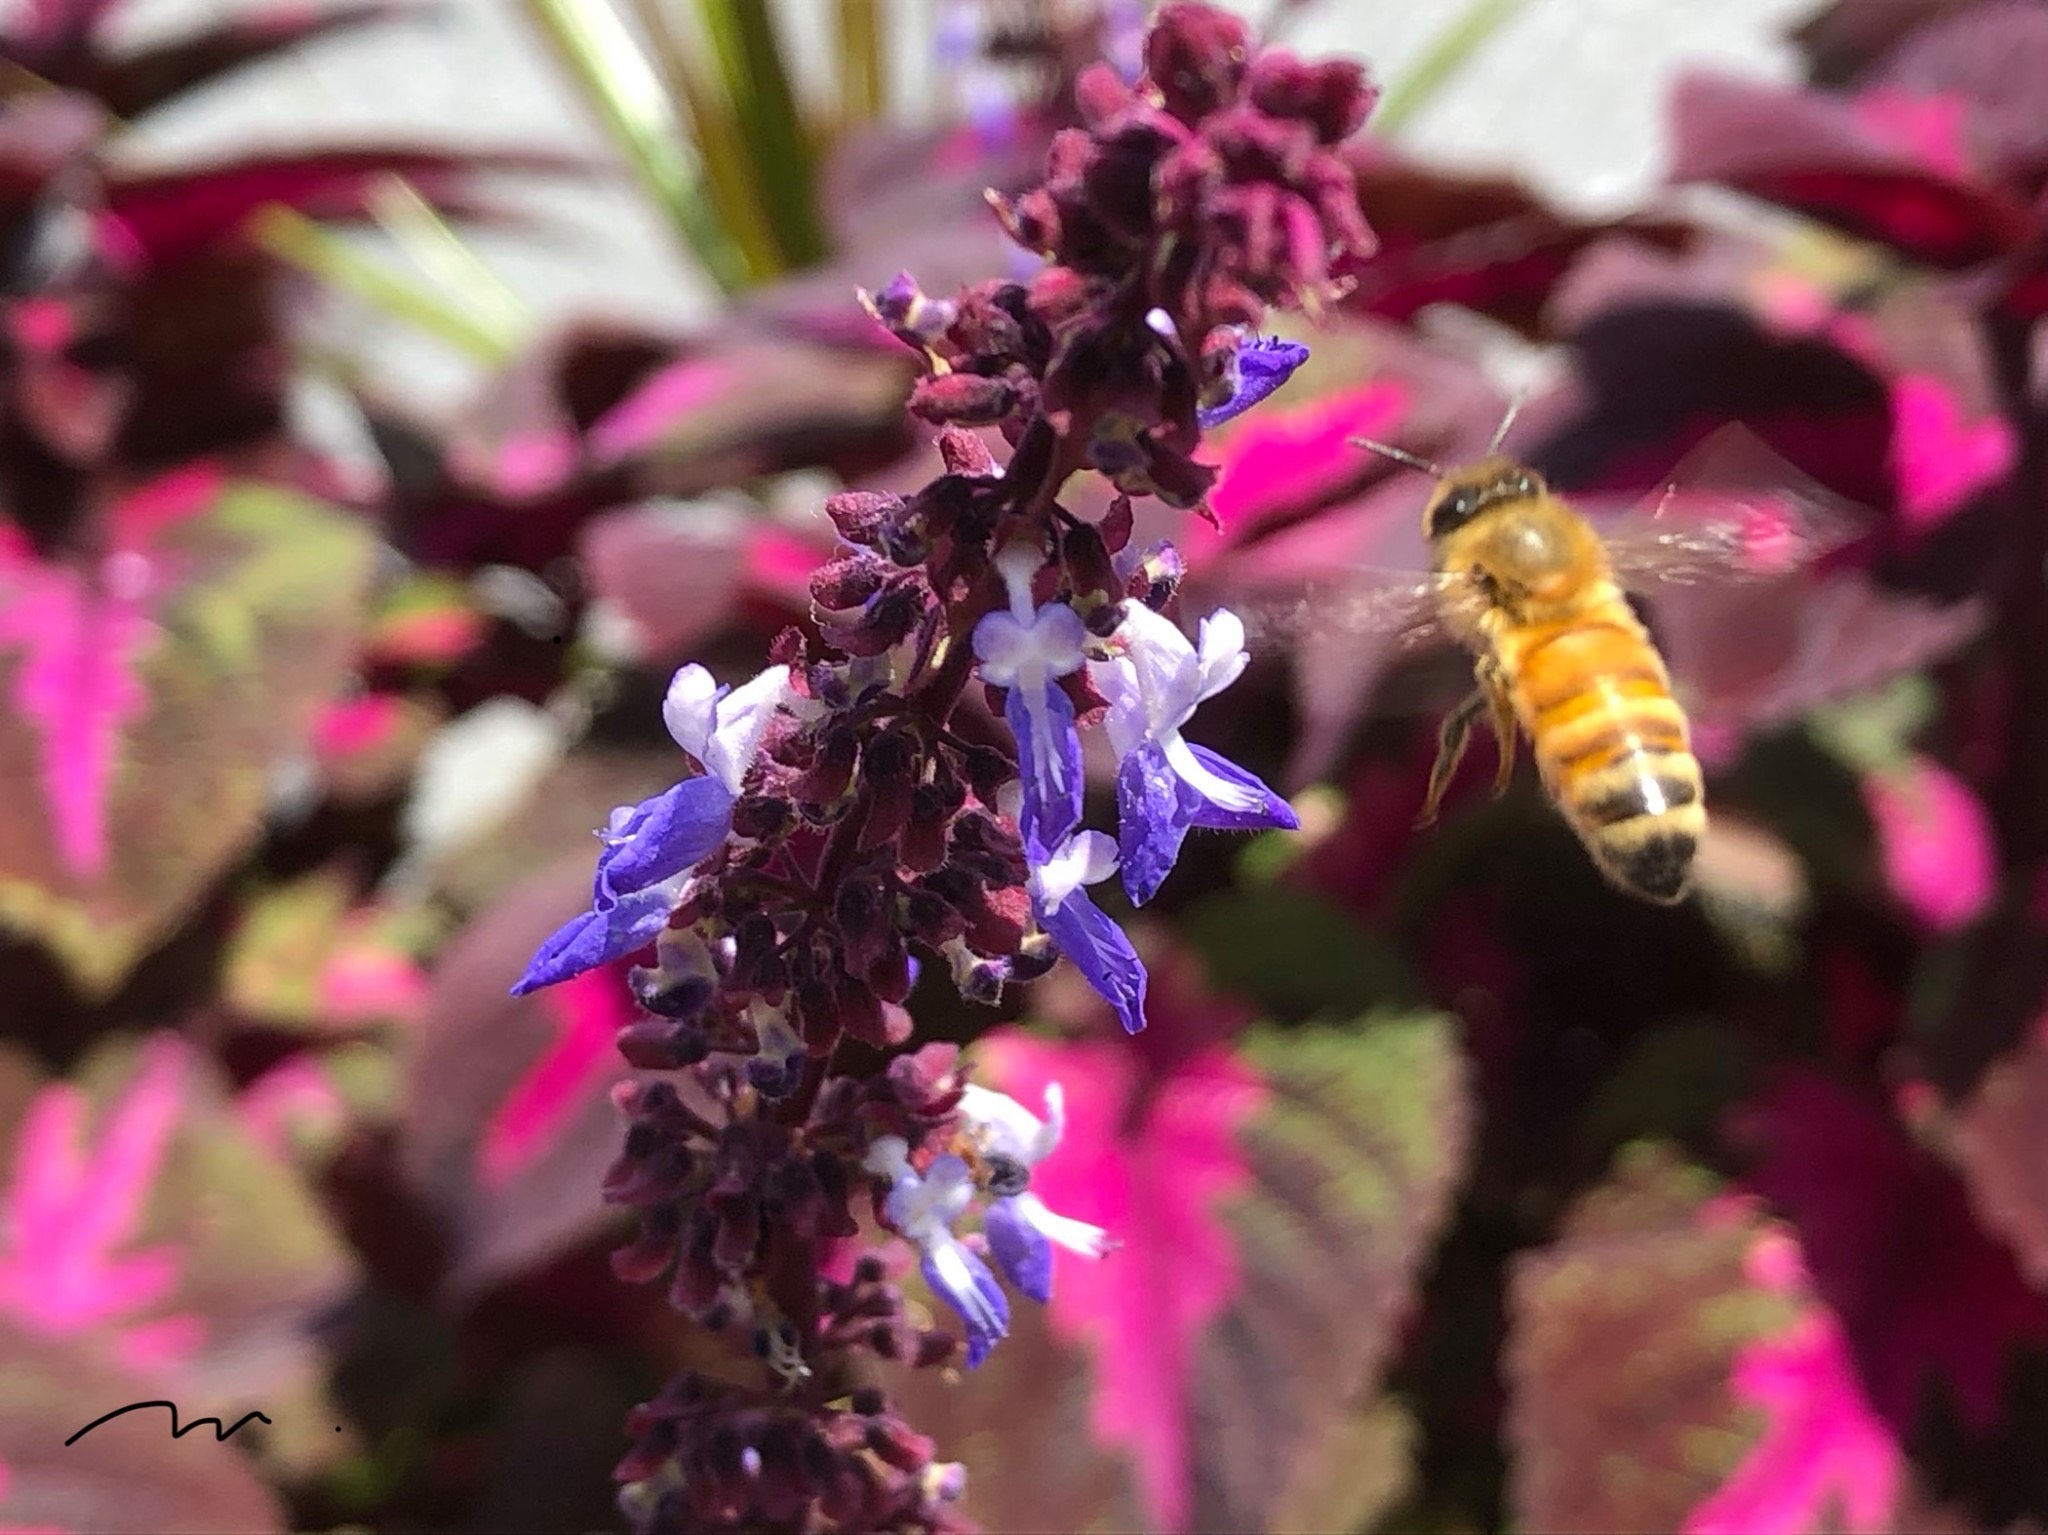 EM helps support honeybees' health